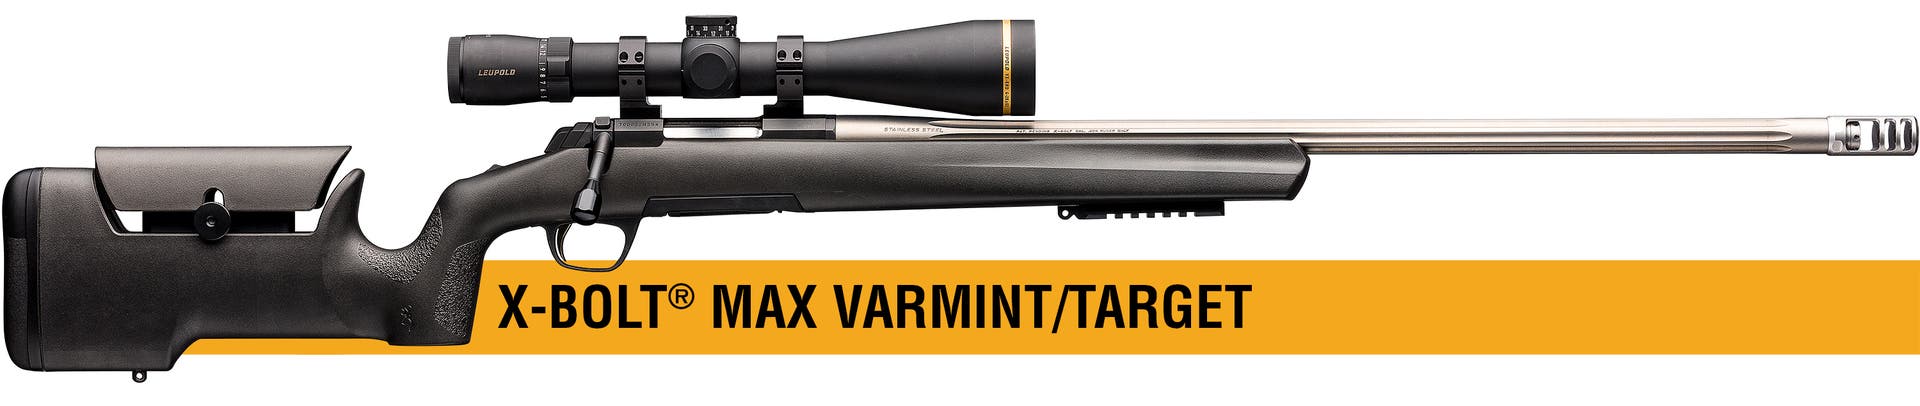 X-Bolt Max Target/Varmint